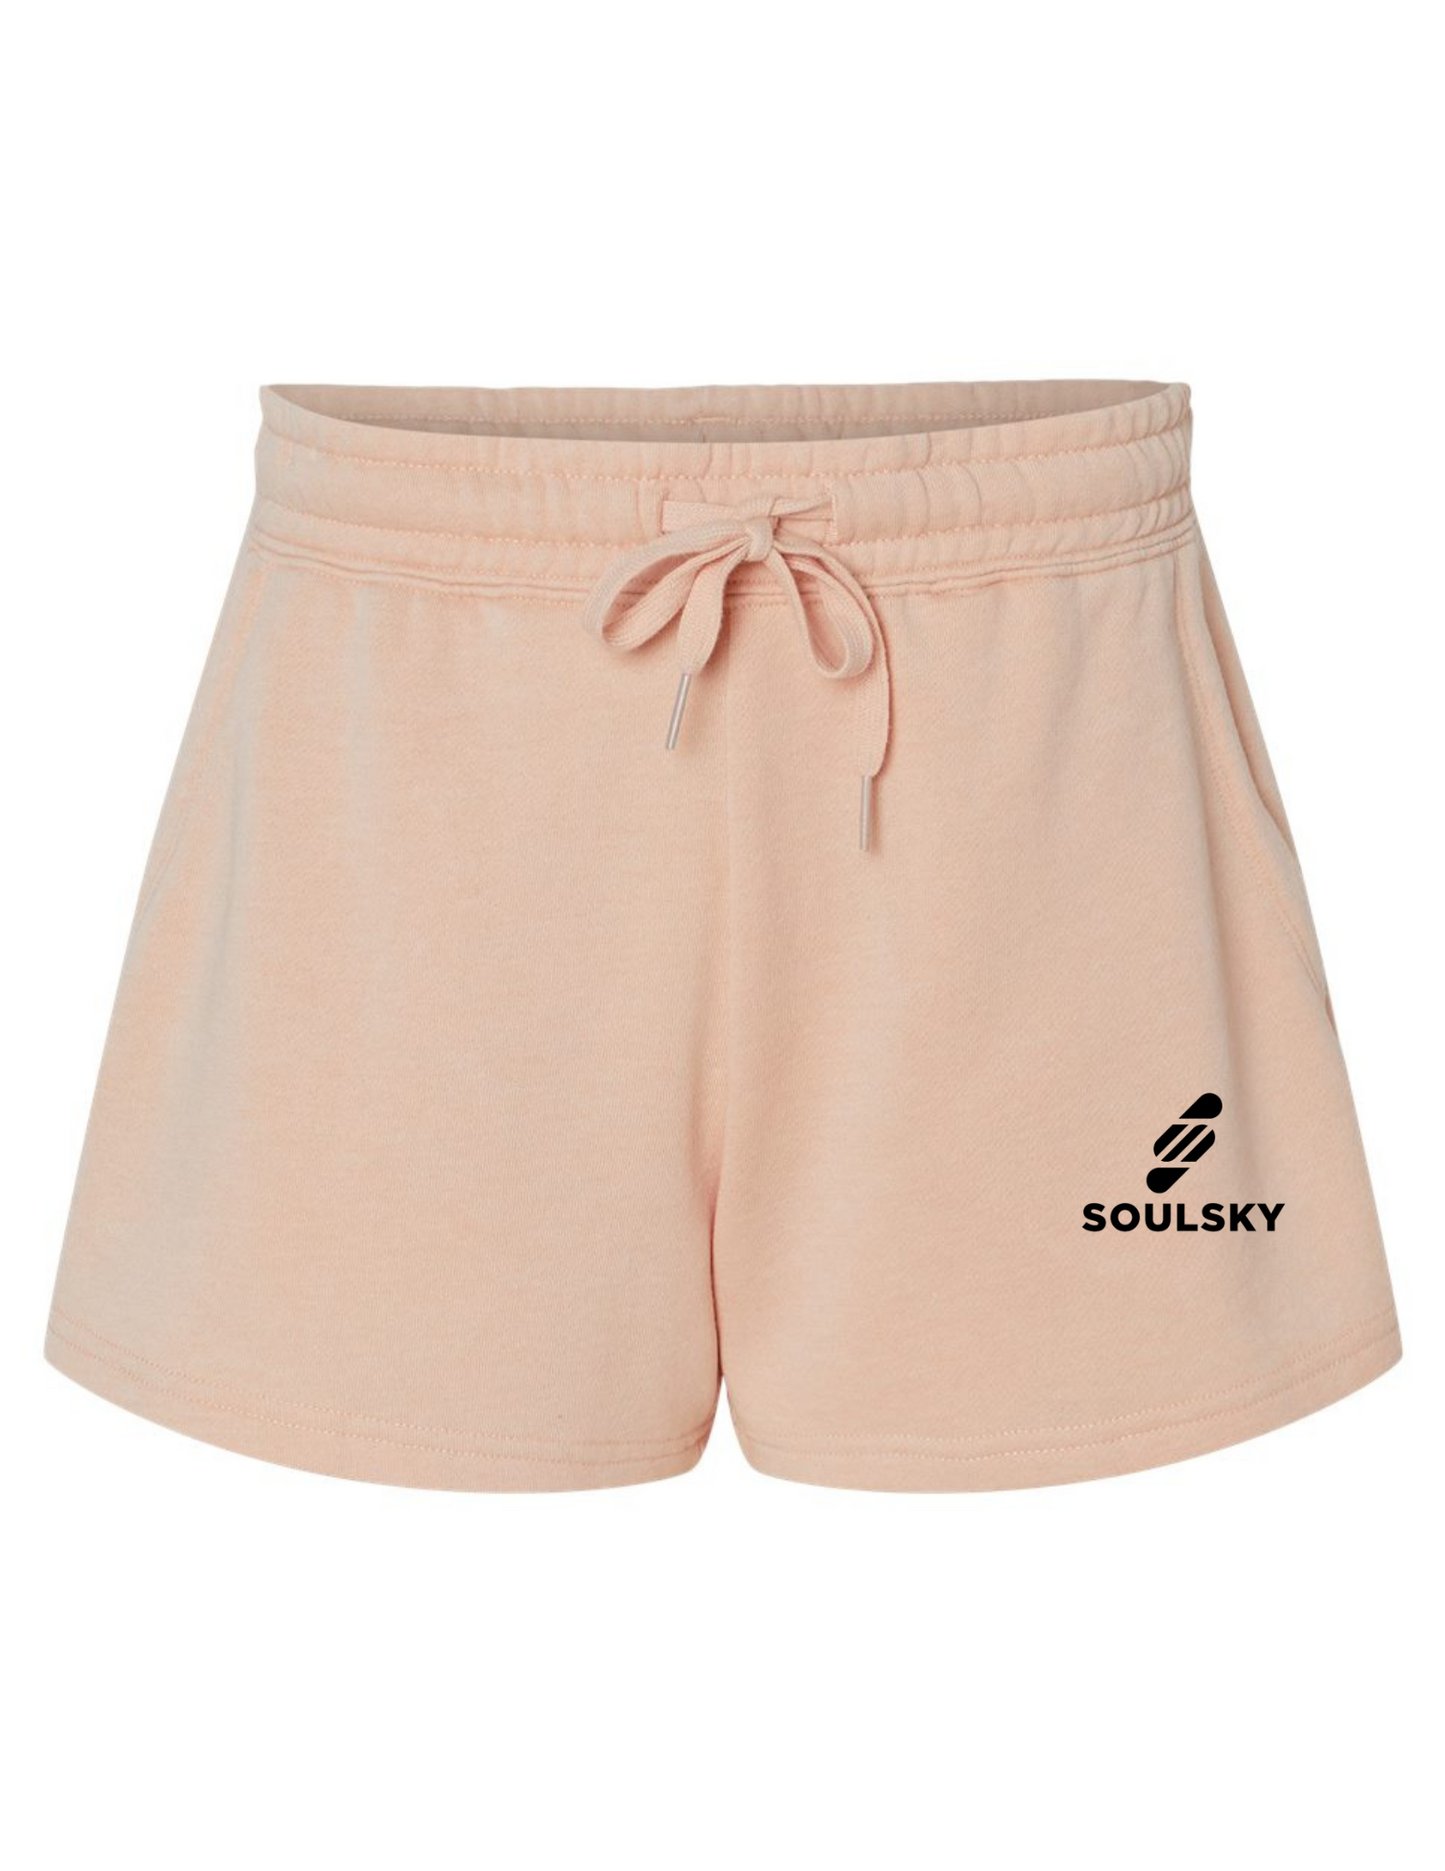 SOULSKY Women's Shorts (Light Pink)